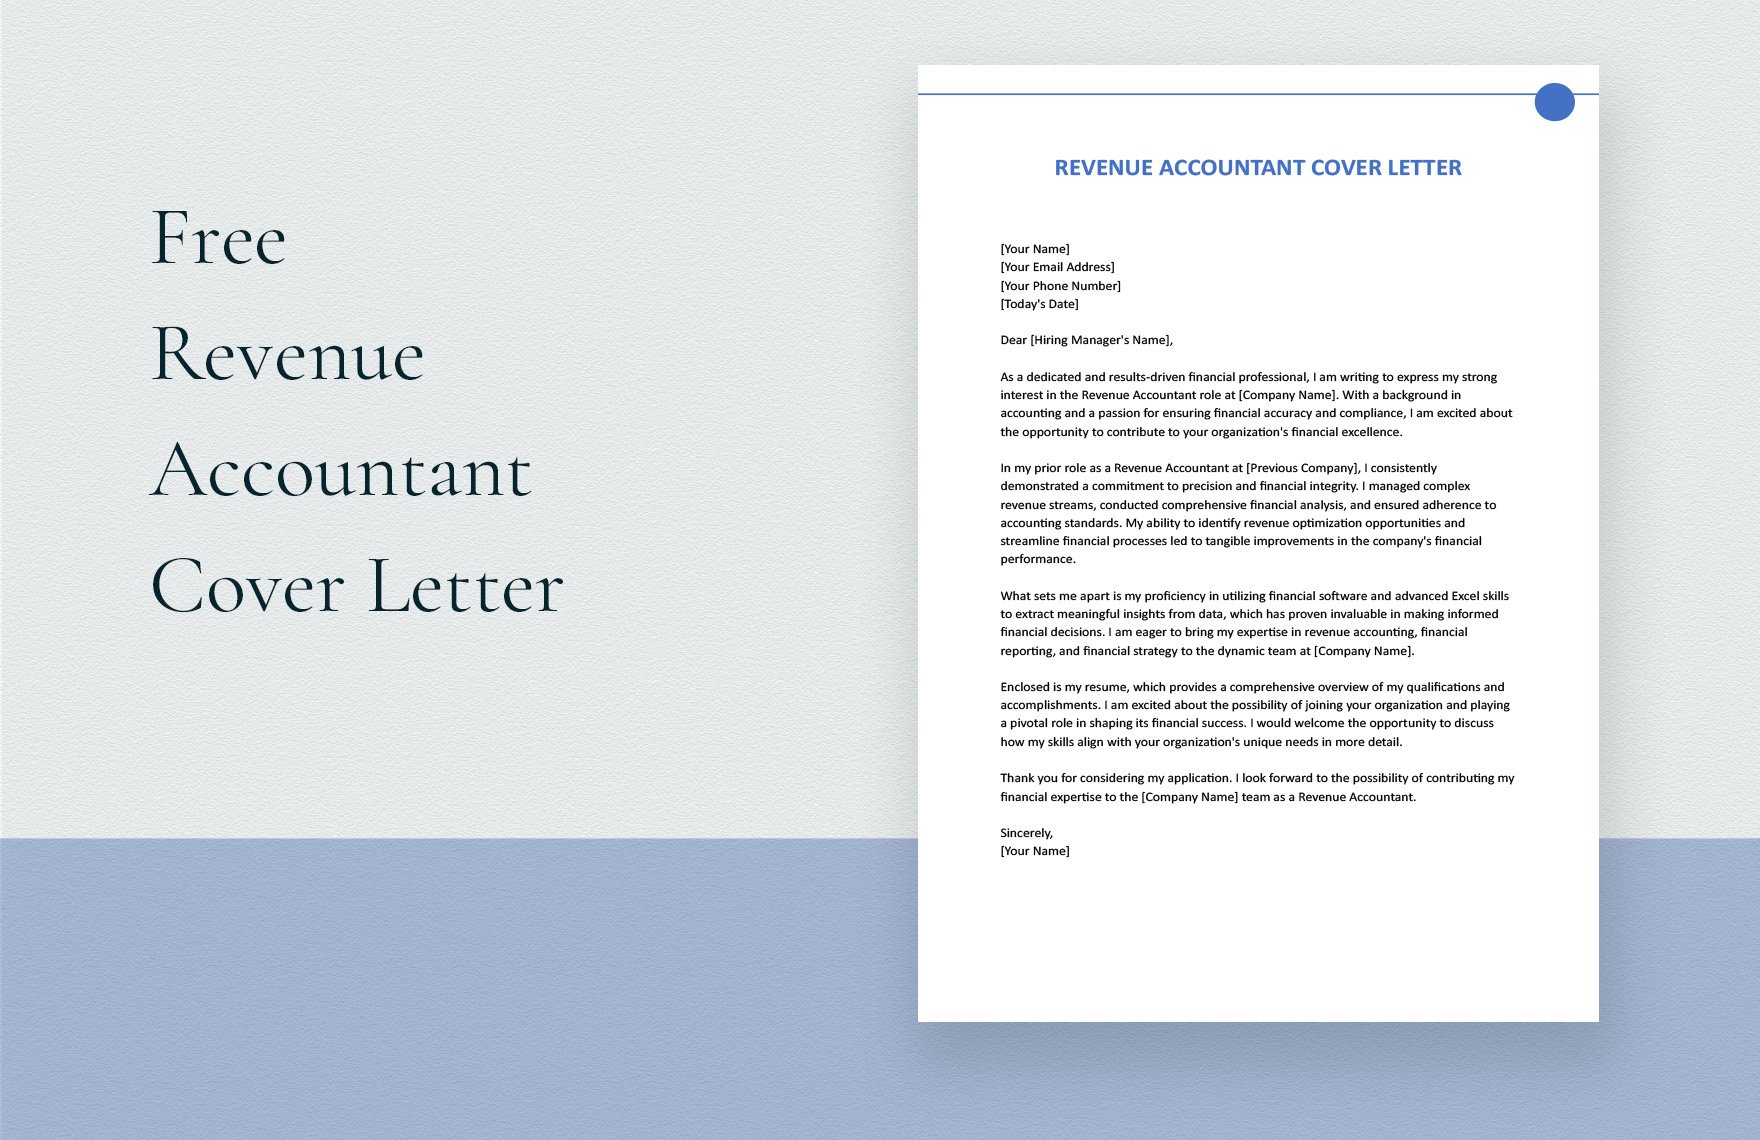 Revenue Accountant Cover Letter